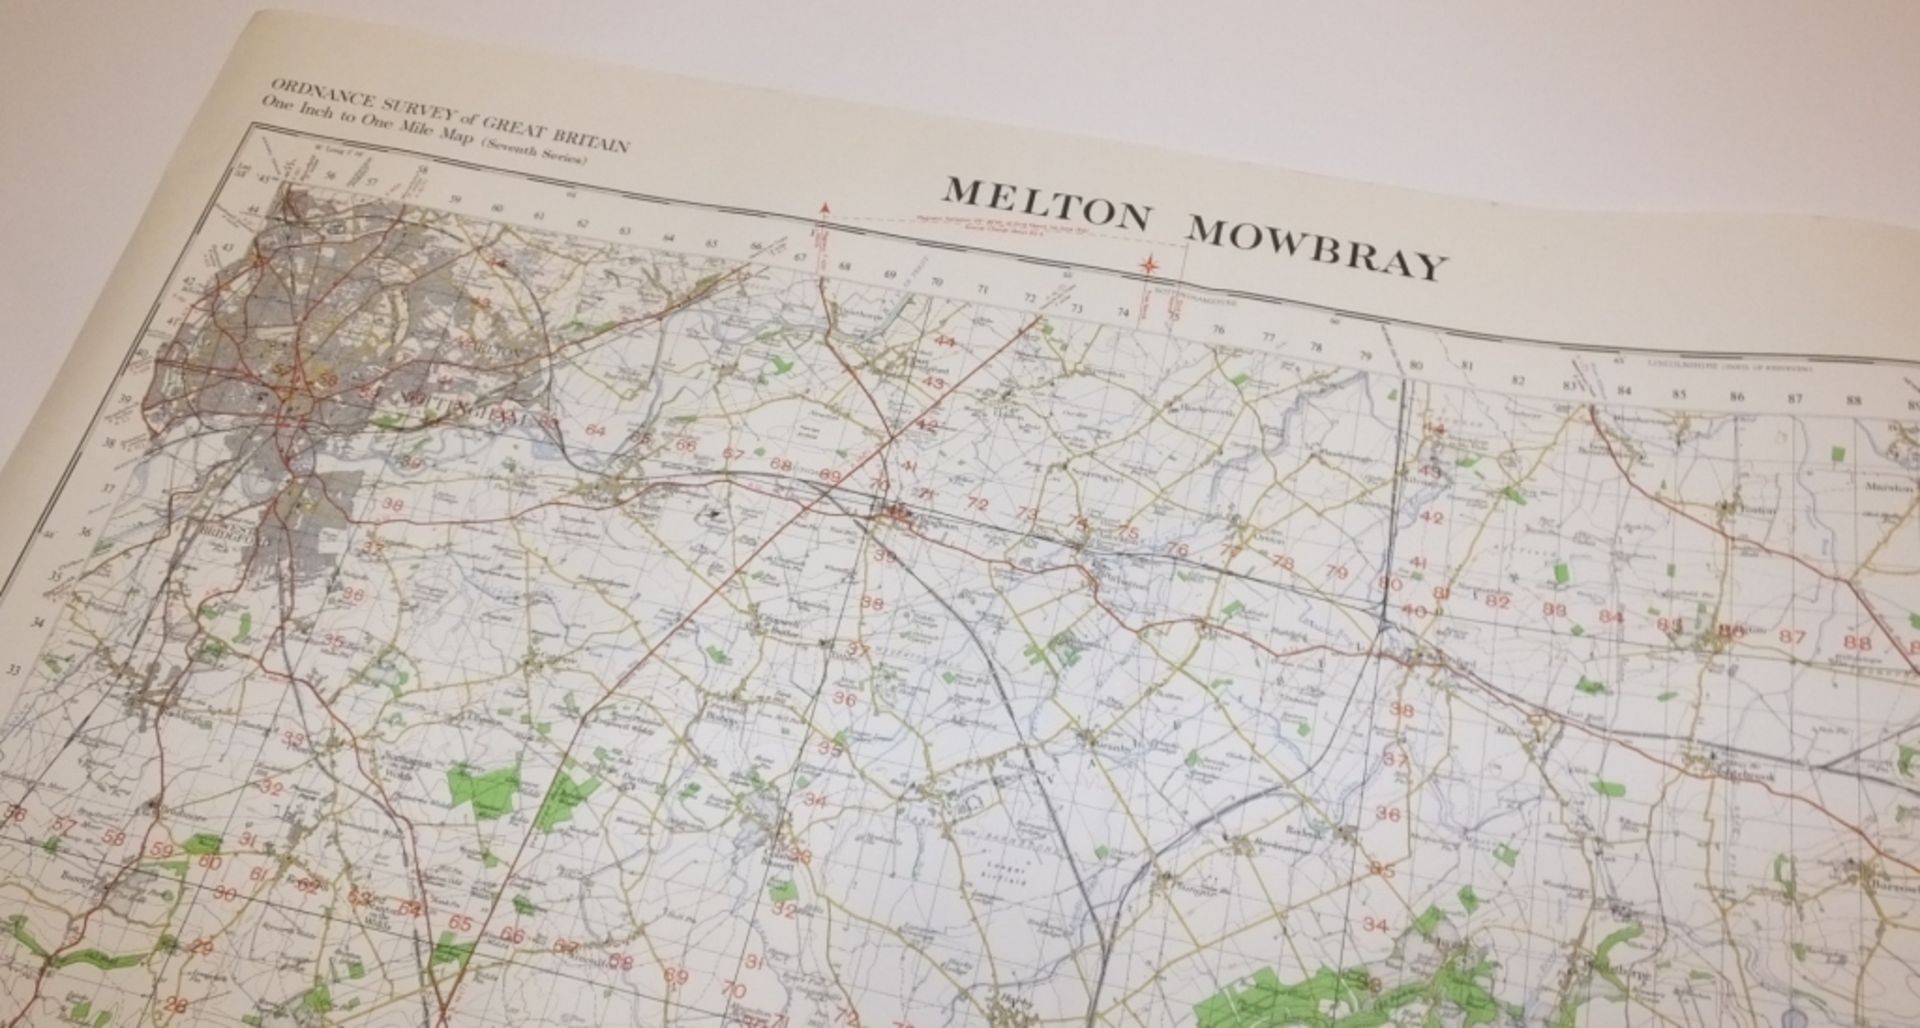 26x ENGLAND & WALES MAP MELTON MOWBRAY 1INCH 1MILE 1961 7TH SERIES 3GSGS SHEET 122 - Bild 3 aus 4